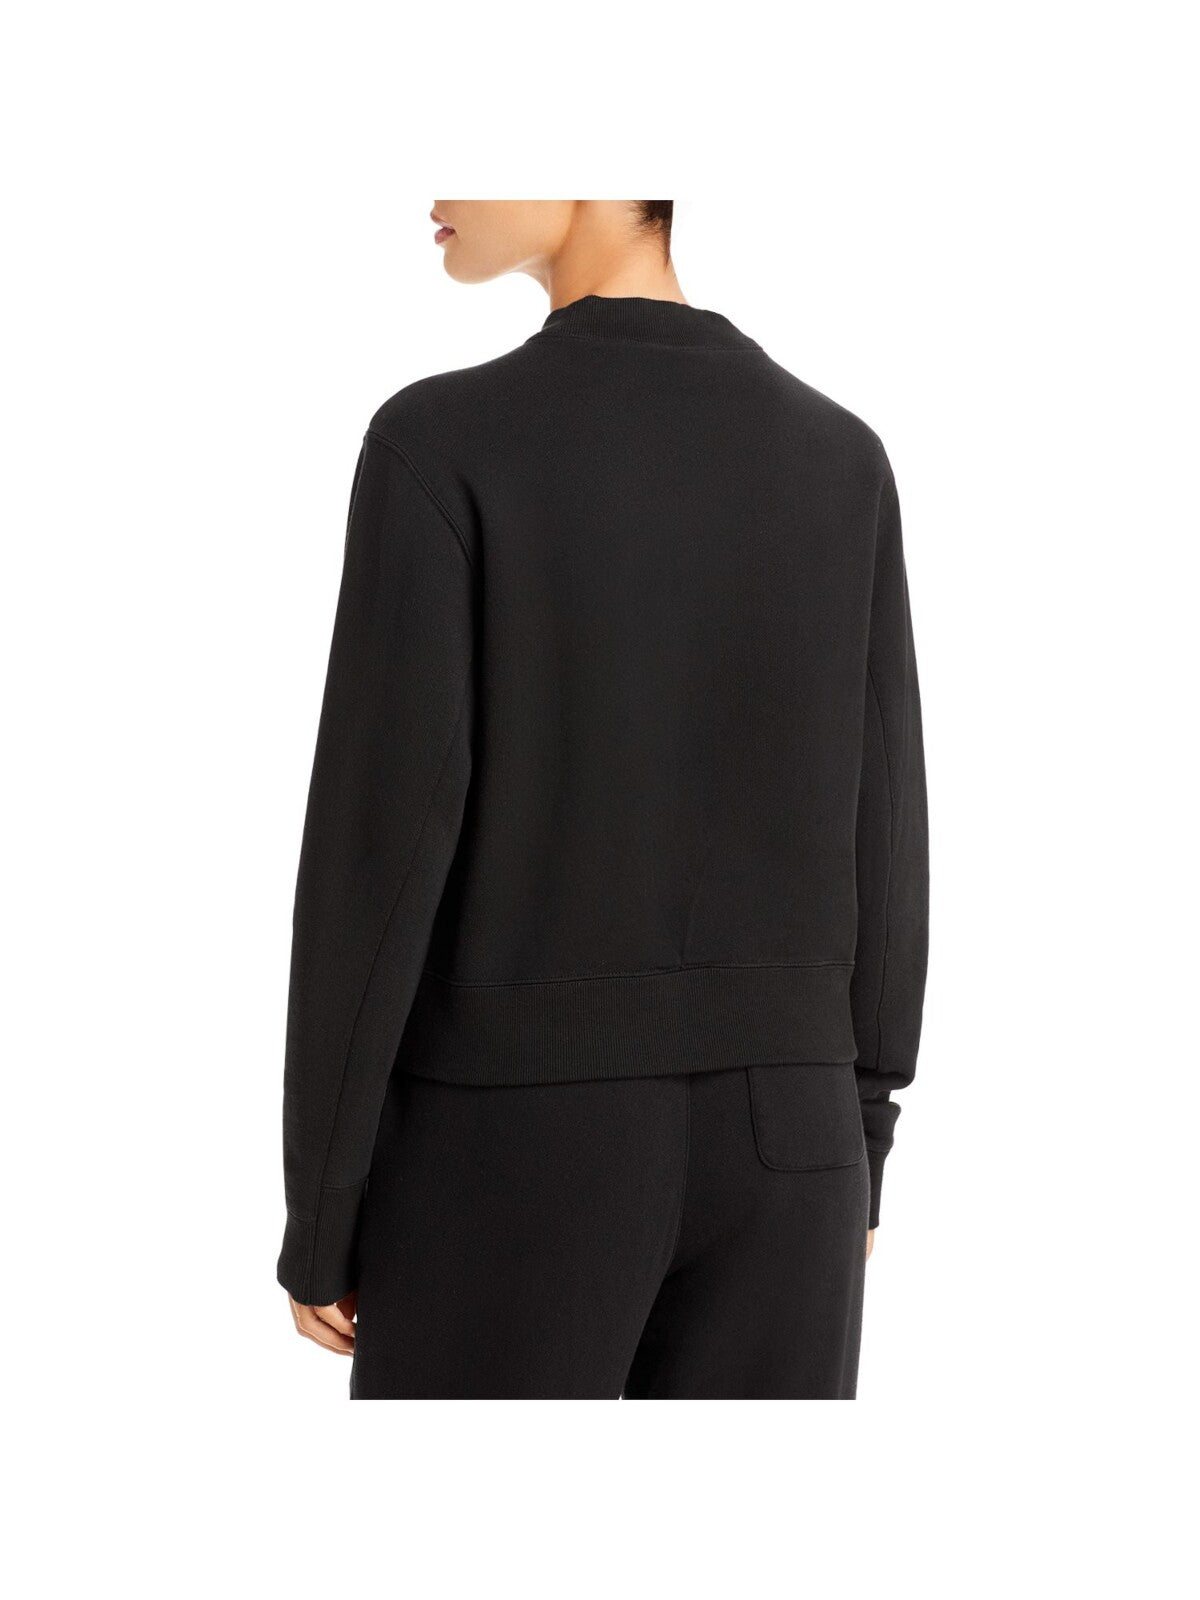 PUMA Womens Black Sweatshirt XL